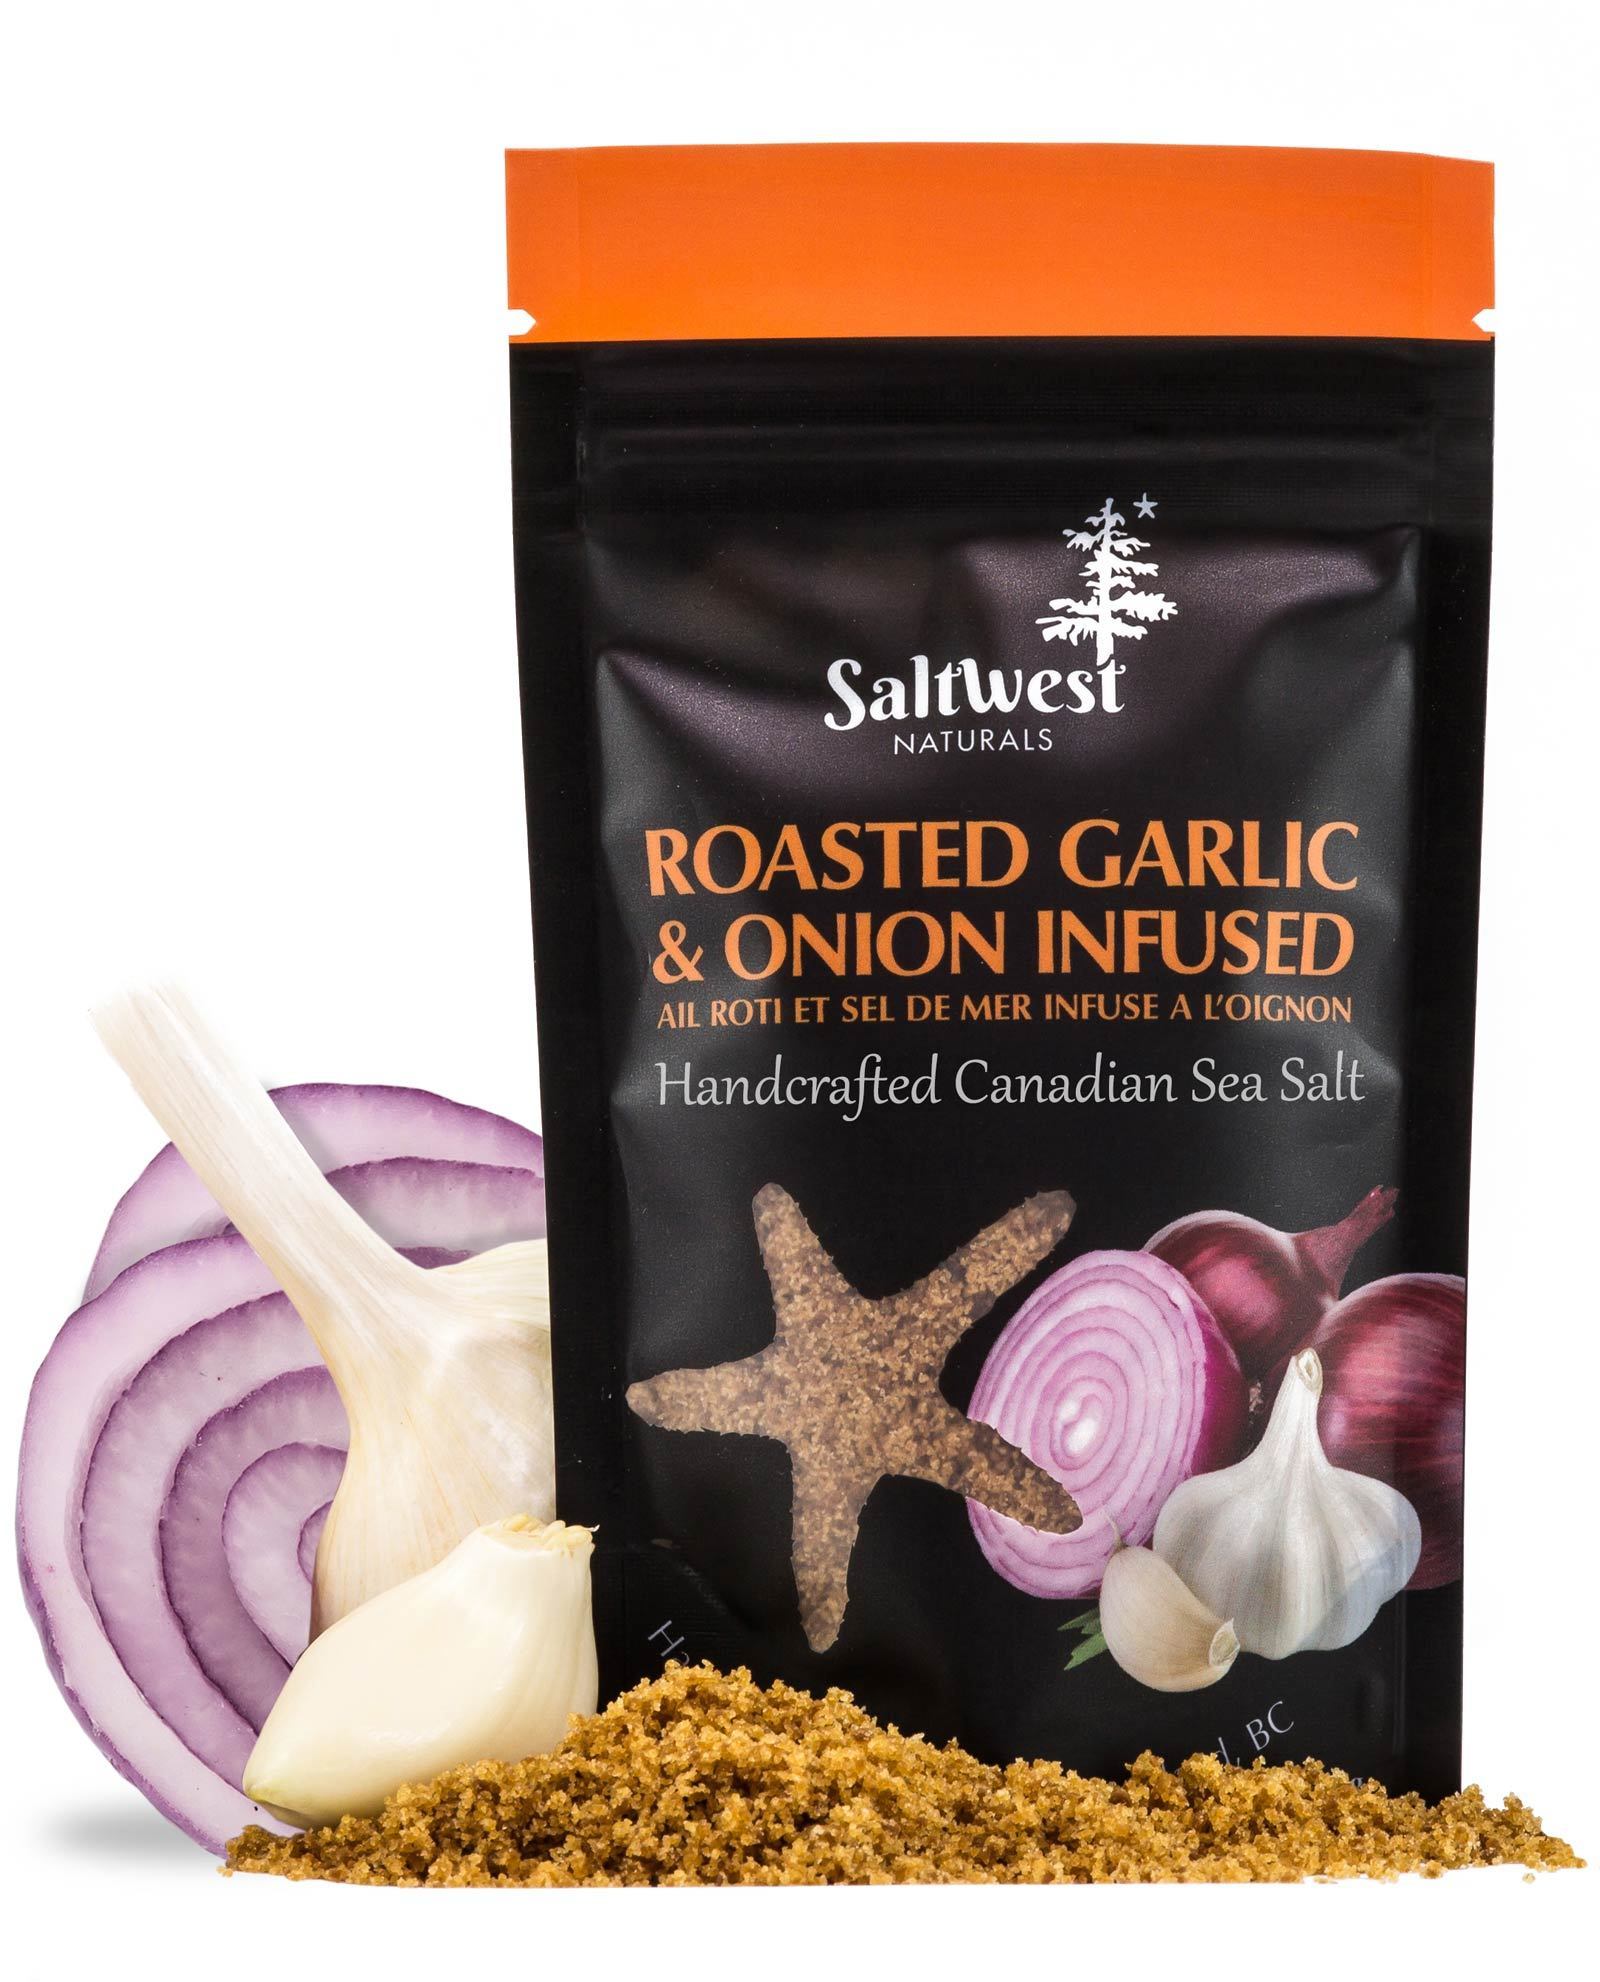 Roasted Garlic & Onion Infused - Handcrafted Canadian Sea Salt